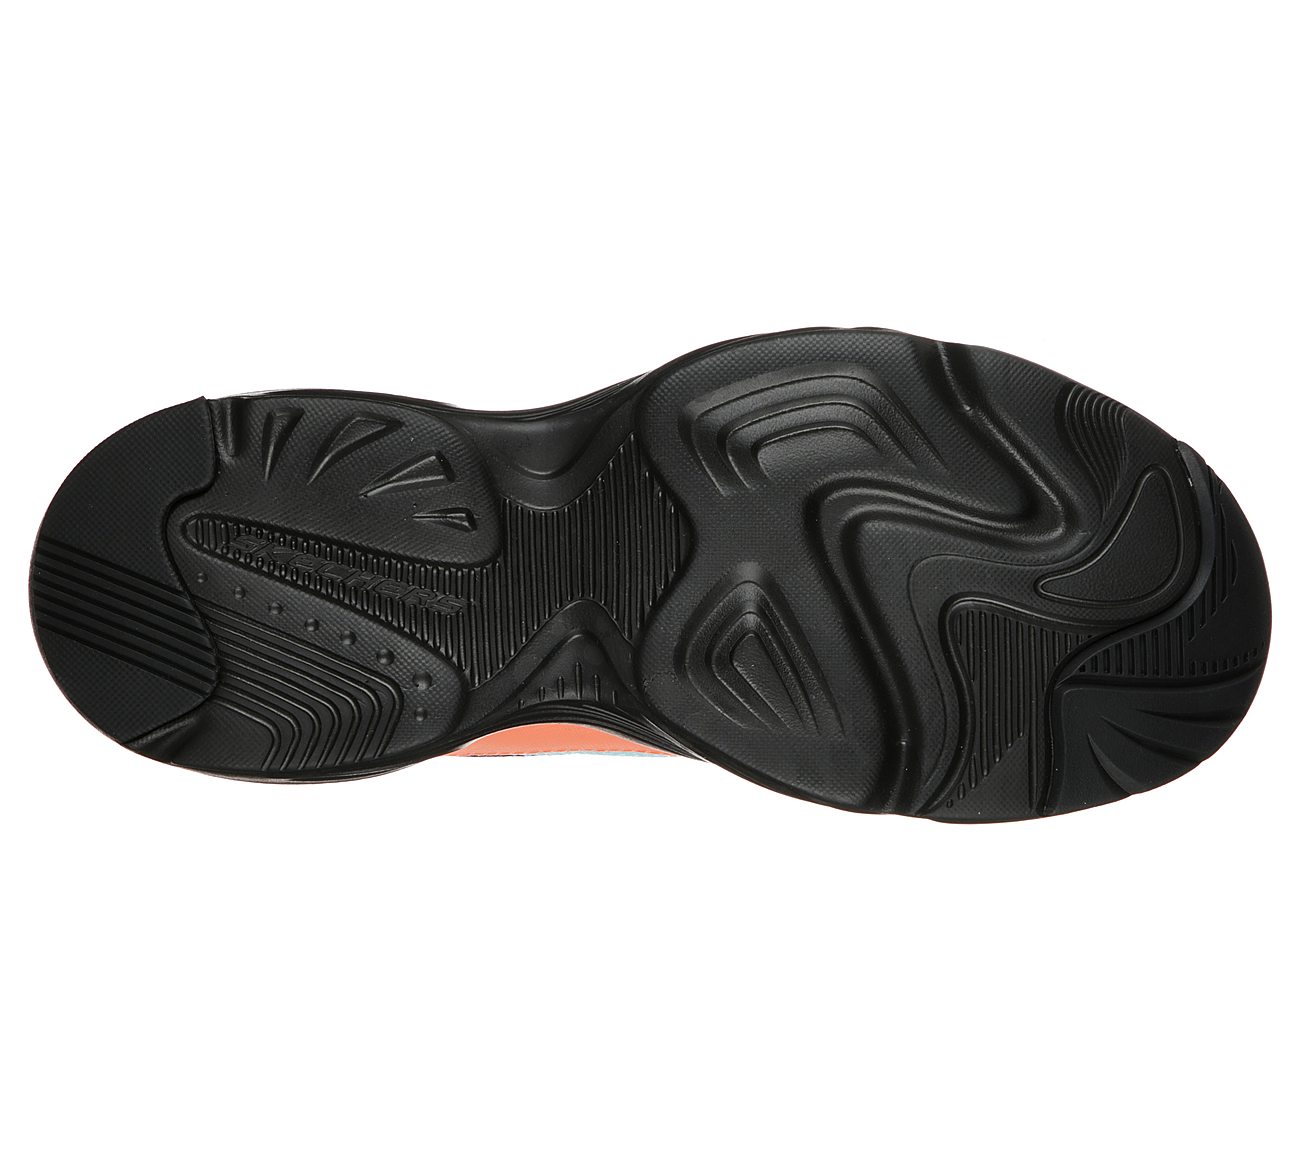 STAMINA AIRY - MOREMI, BLACK/MULTI Footwear Bottom View